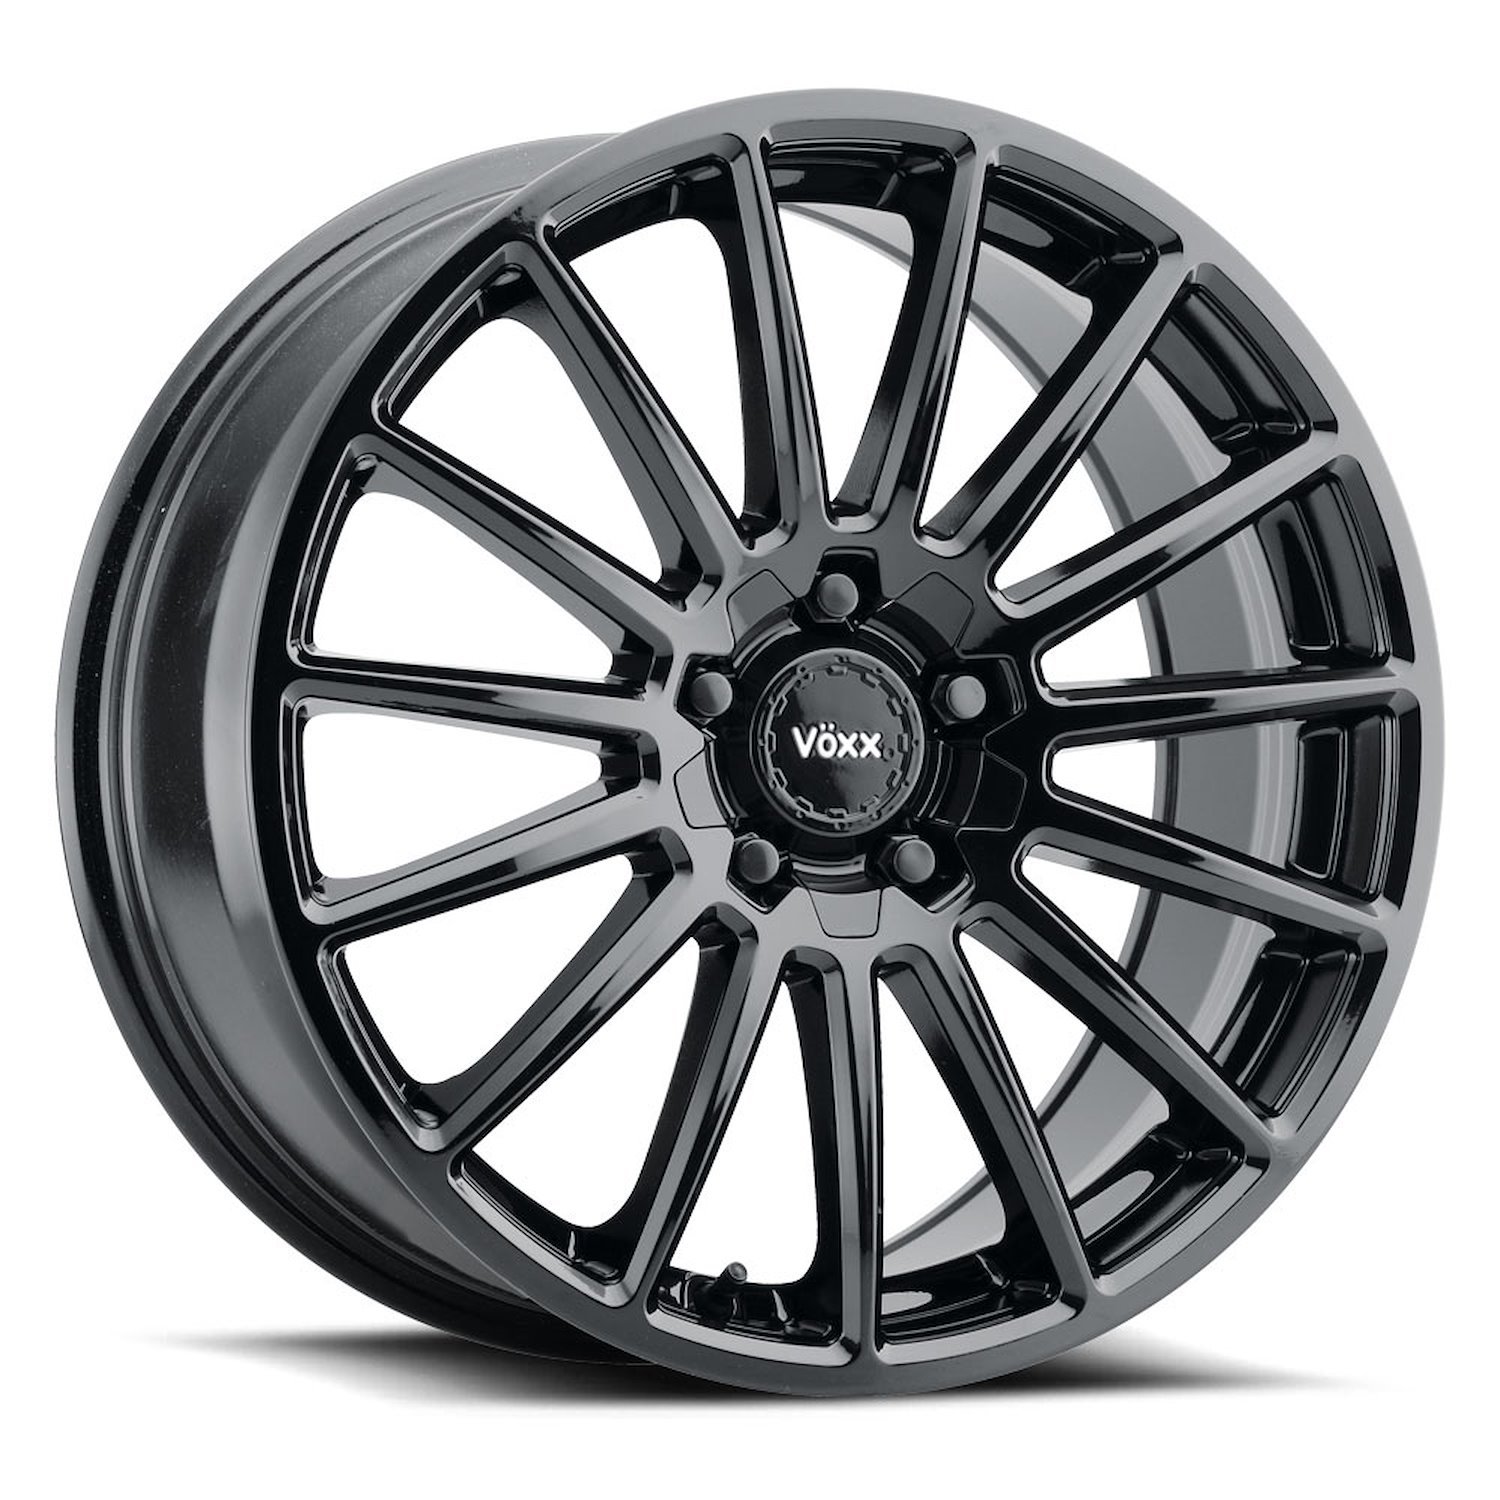 CAS 775-5004-20 GB Casina Wheel [Size: 17" x 7.50"] Finish: Gloss Black